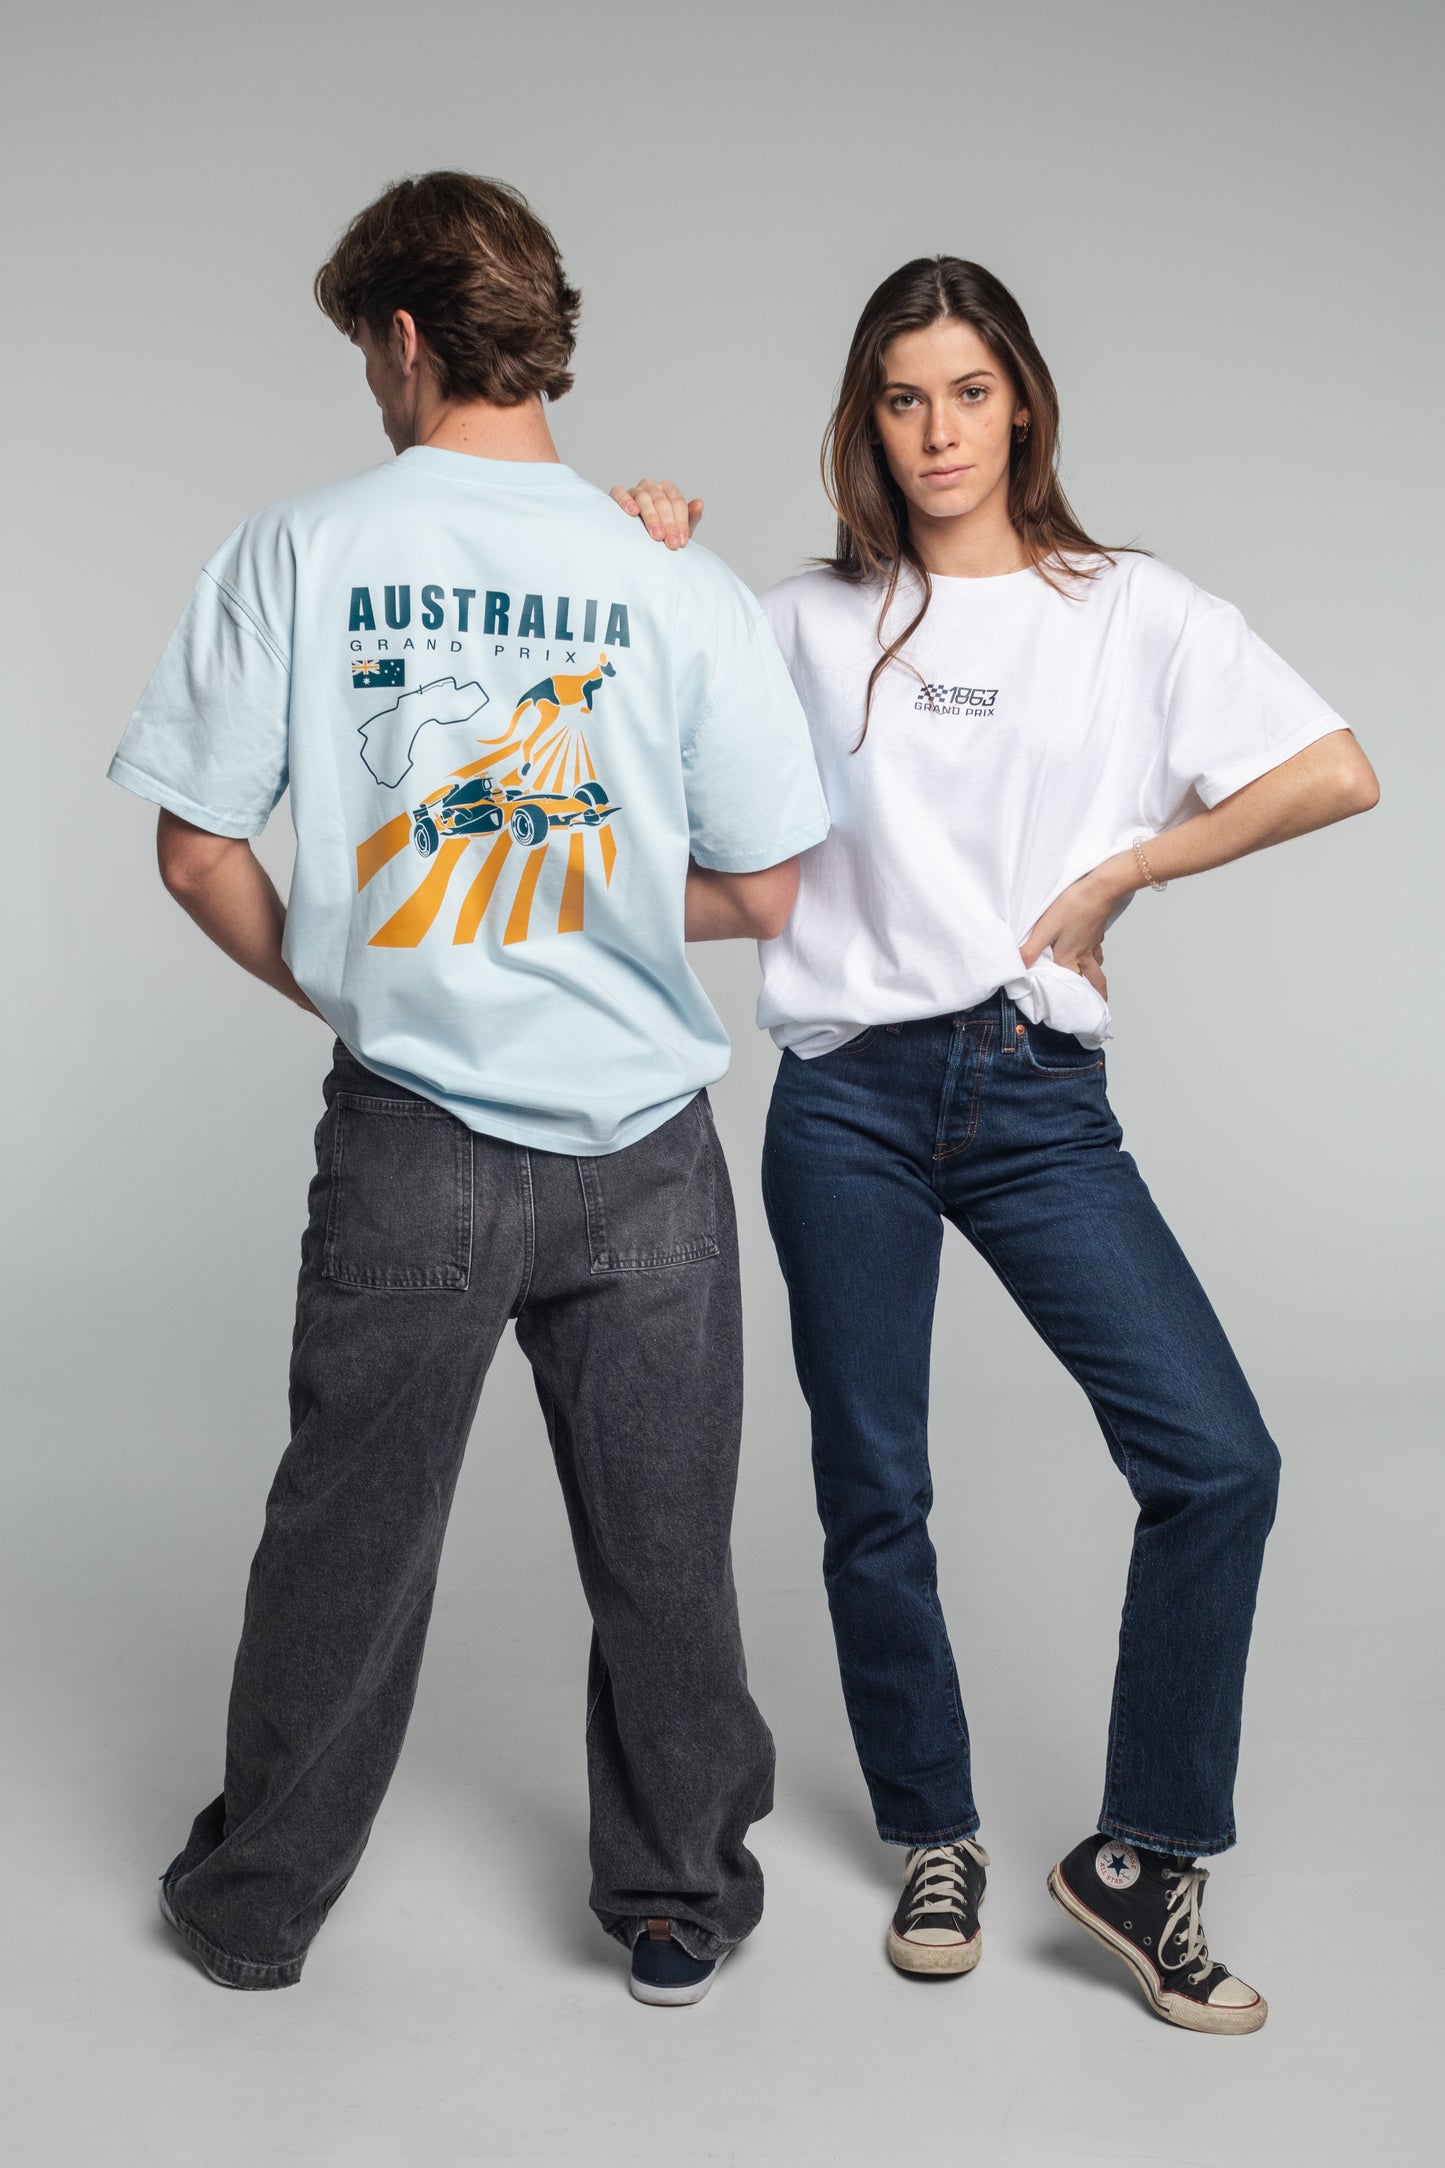 "Australia GP" Formula 1 T-shirt - Blue